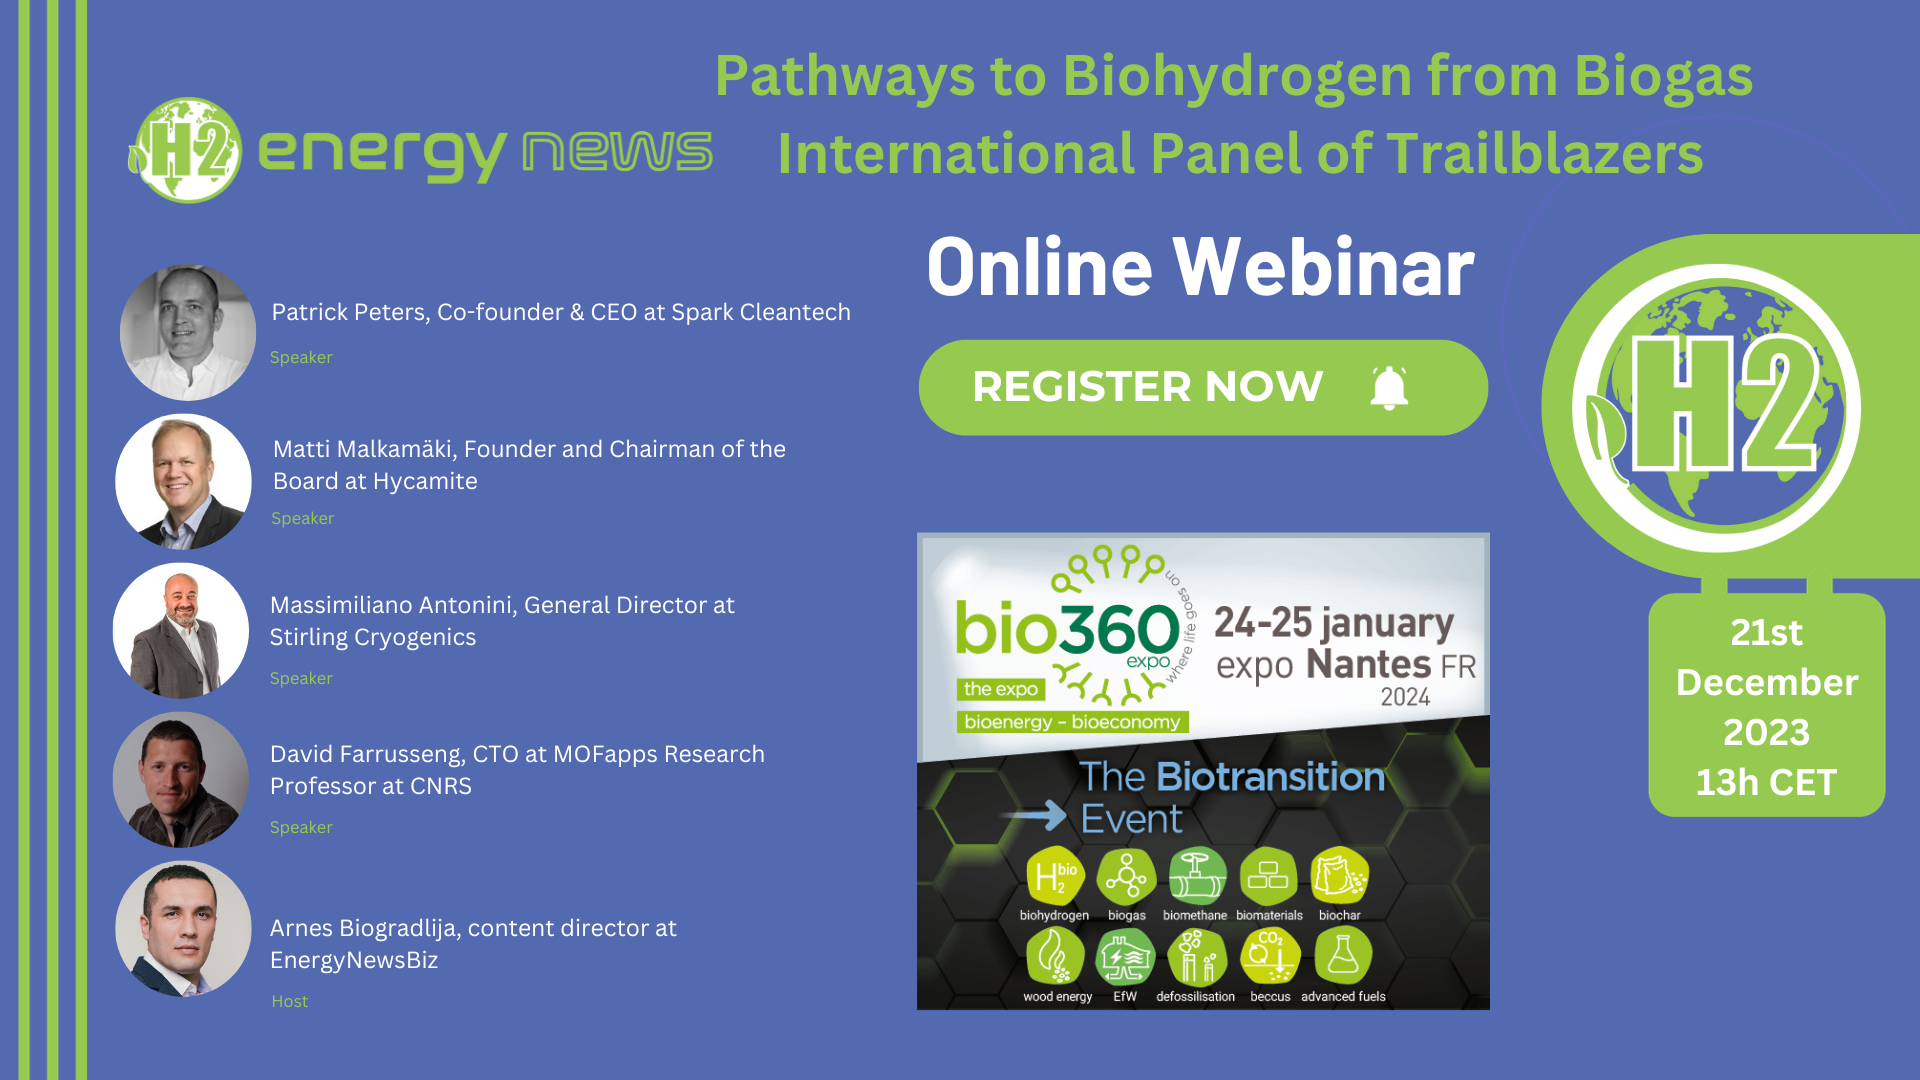 Pathways to Biohydrogen from Biogas, International Panel of Trailblazers